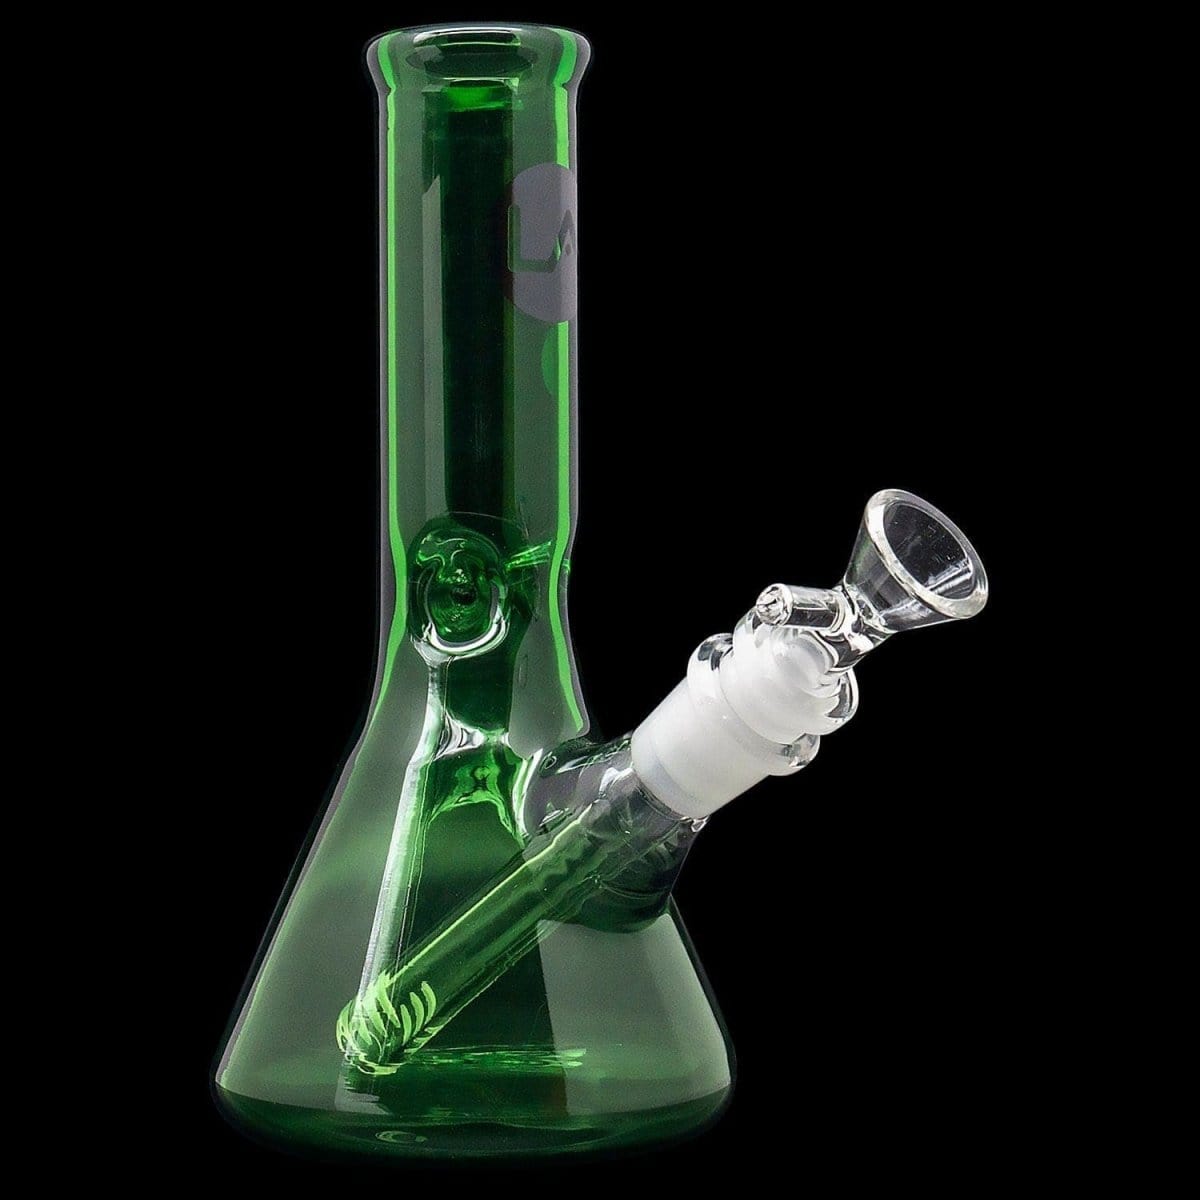 LA Pipes Bong "Crown Jewel" Emerald Green Beaker Bong